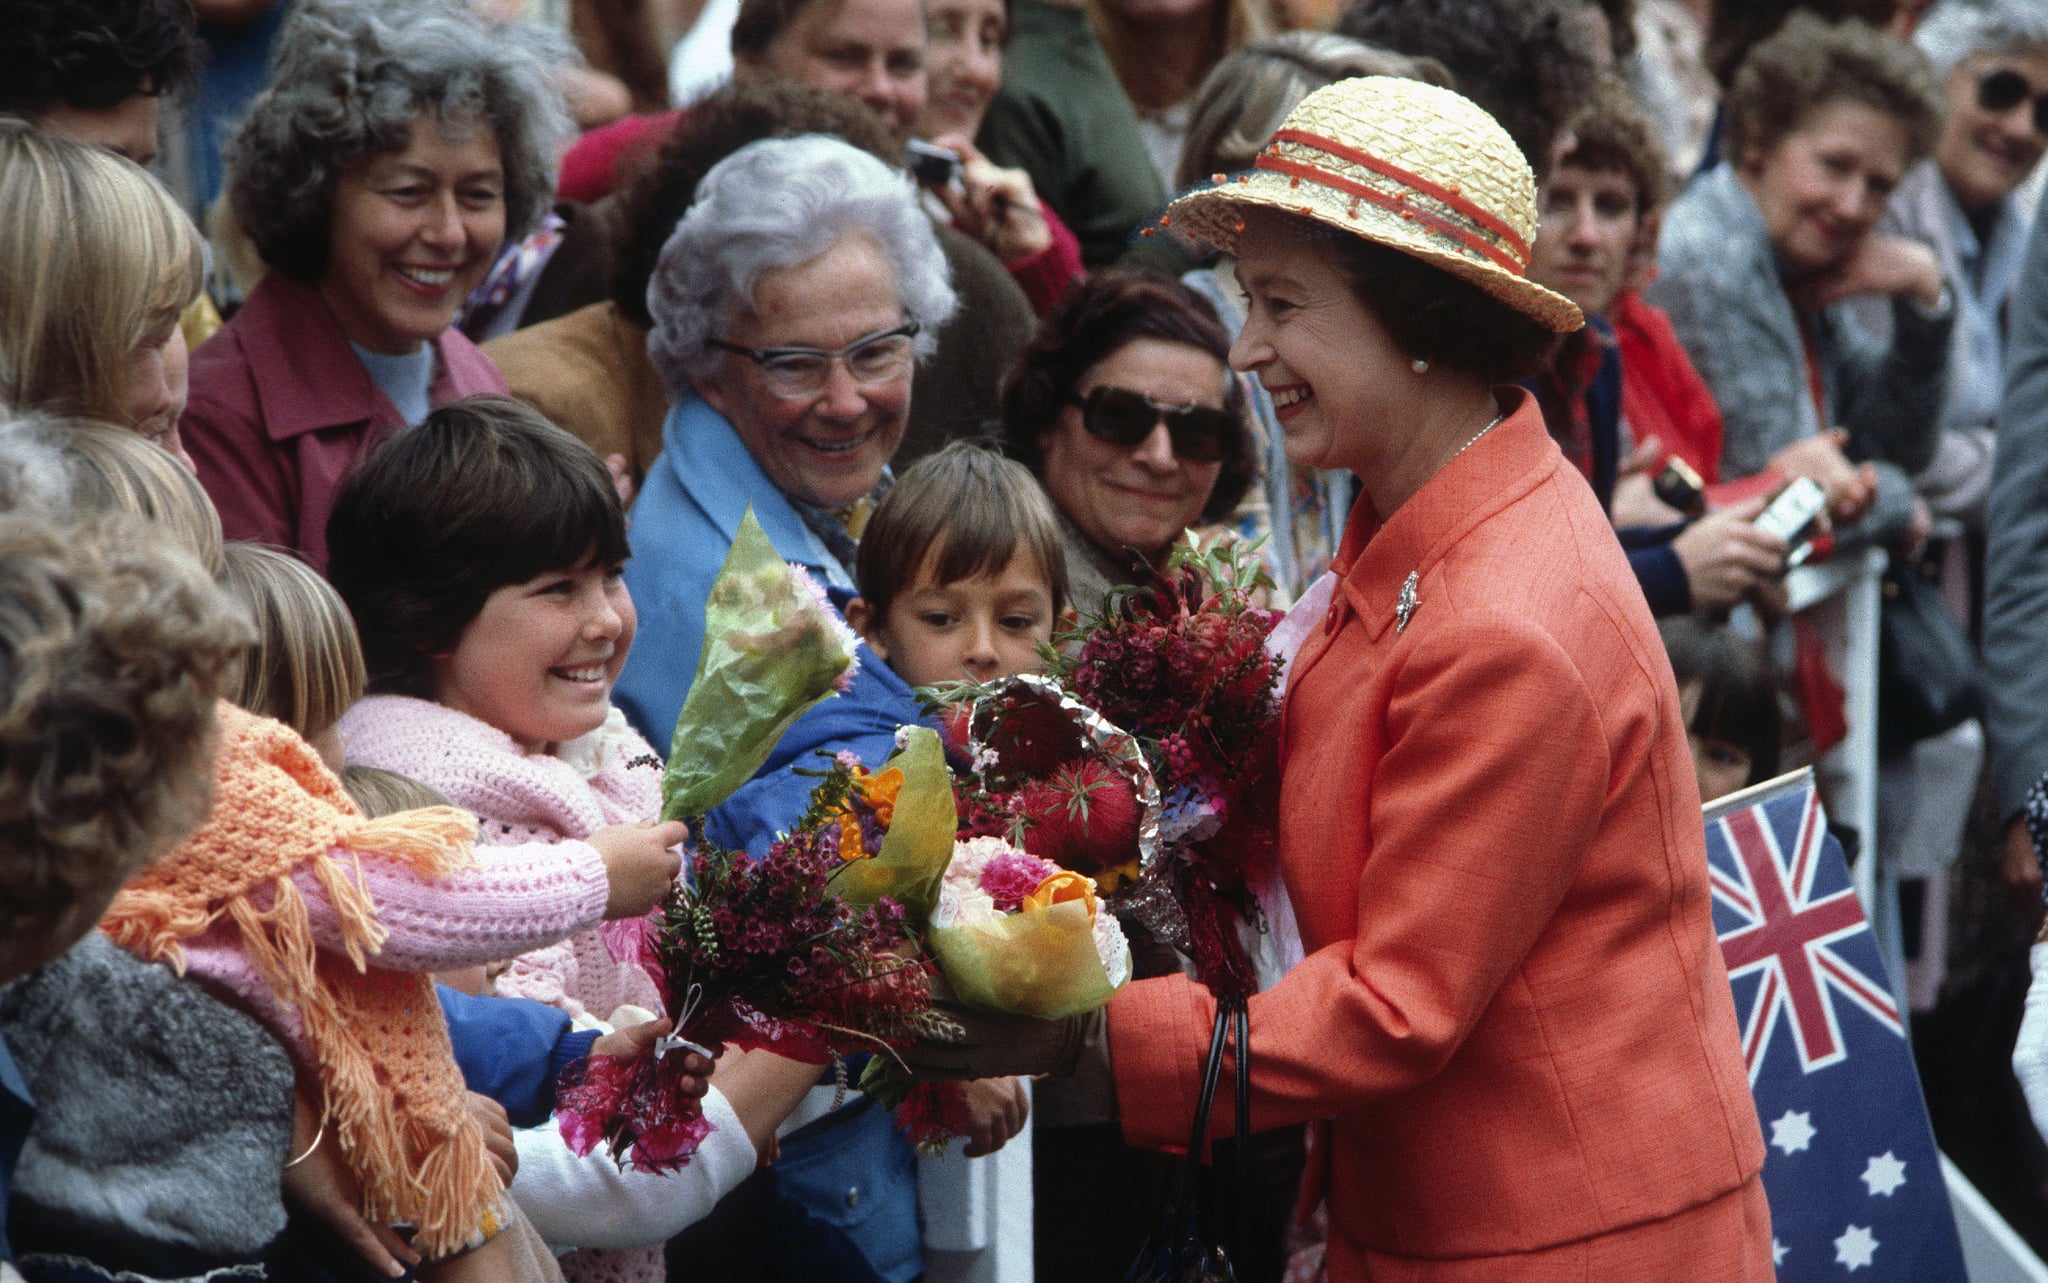 Queen Elizabeth II greets well-wishers in Australia in 1981